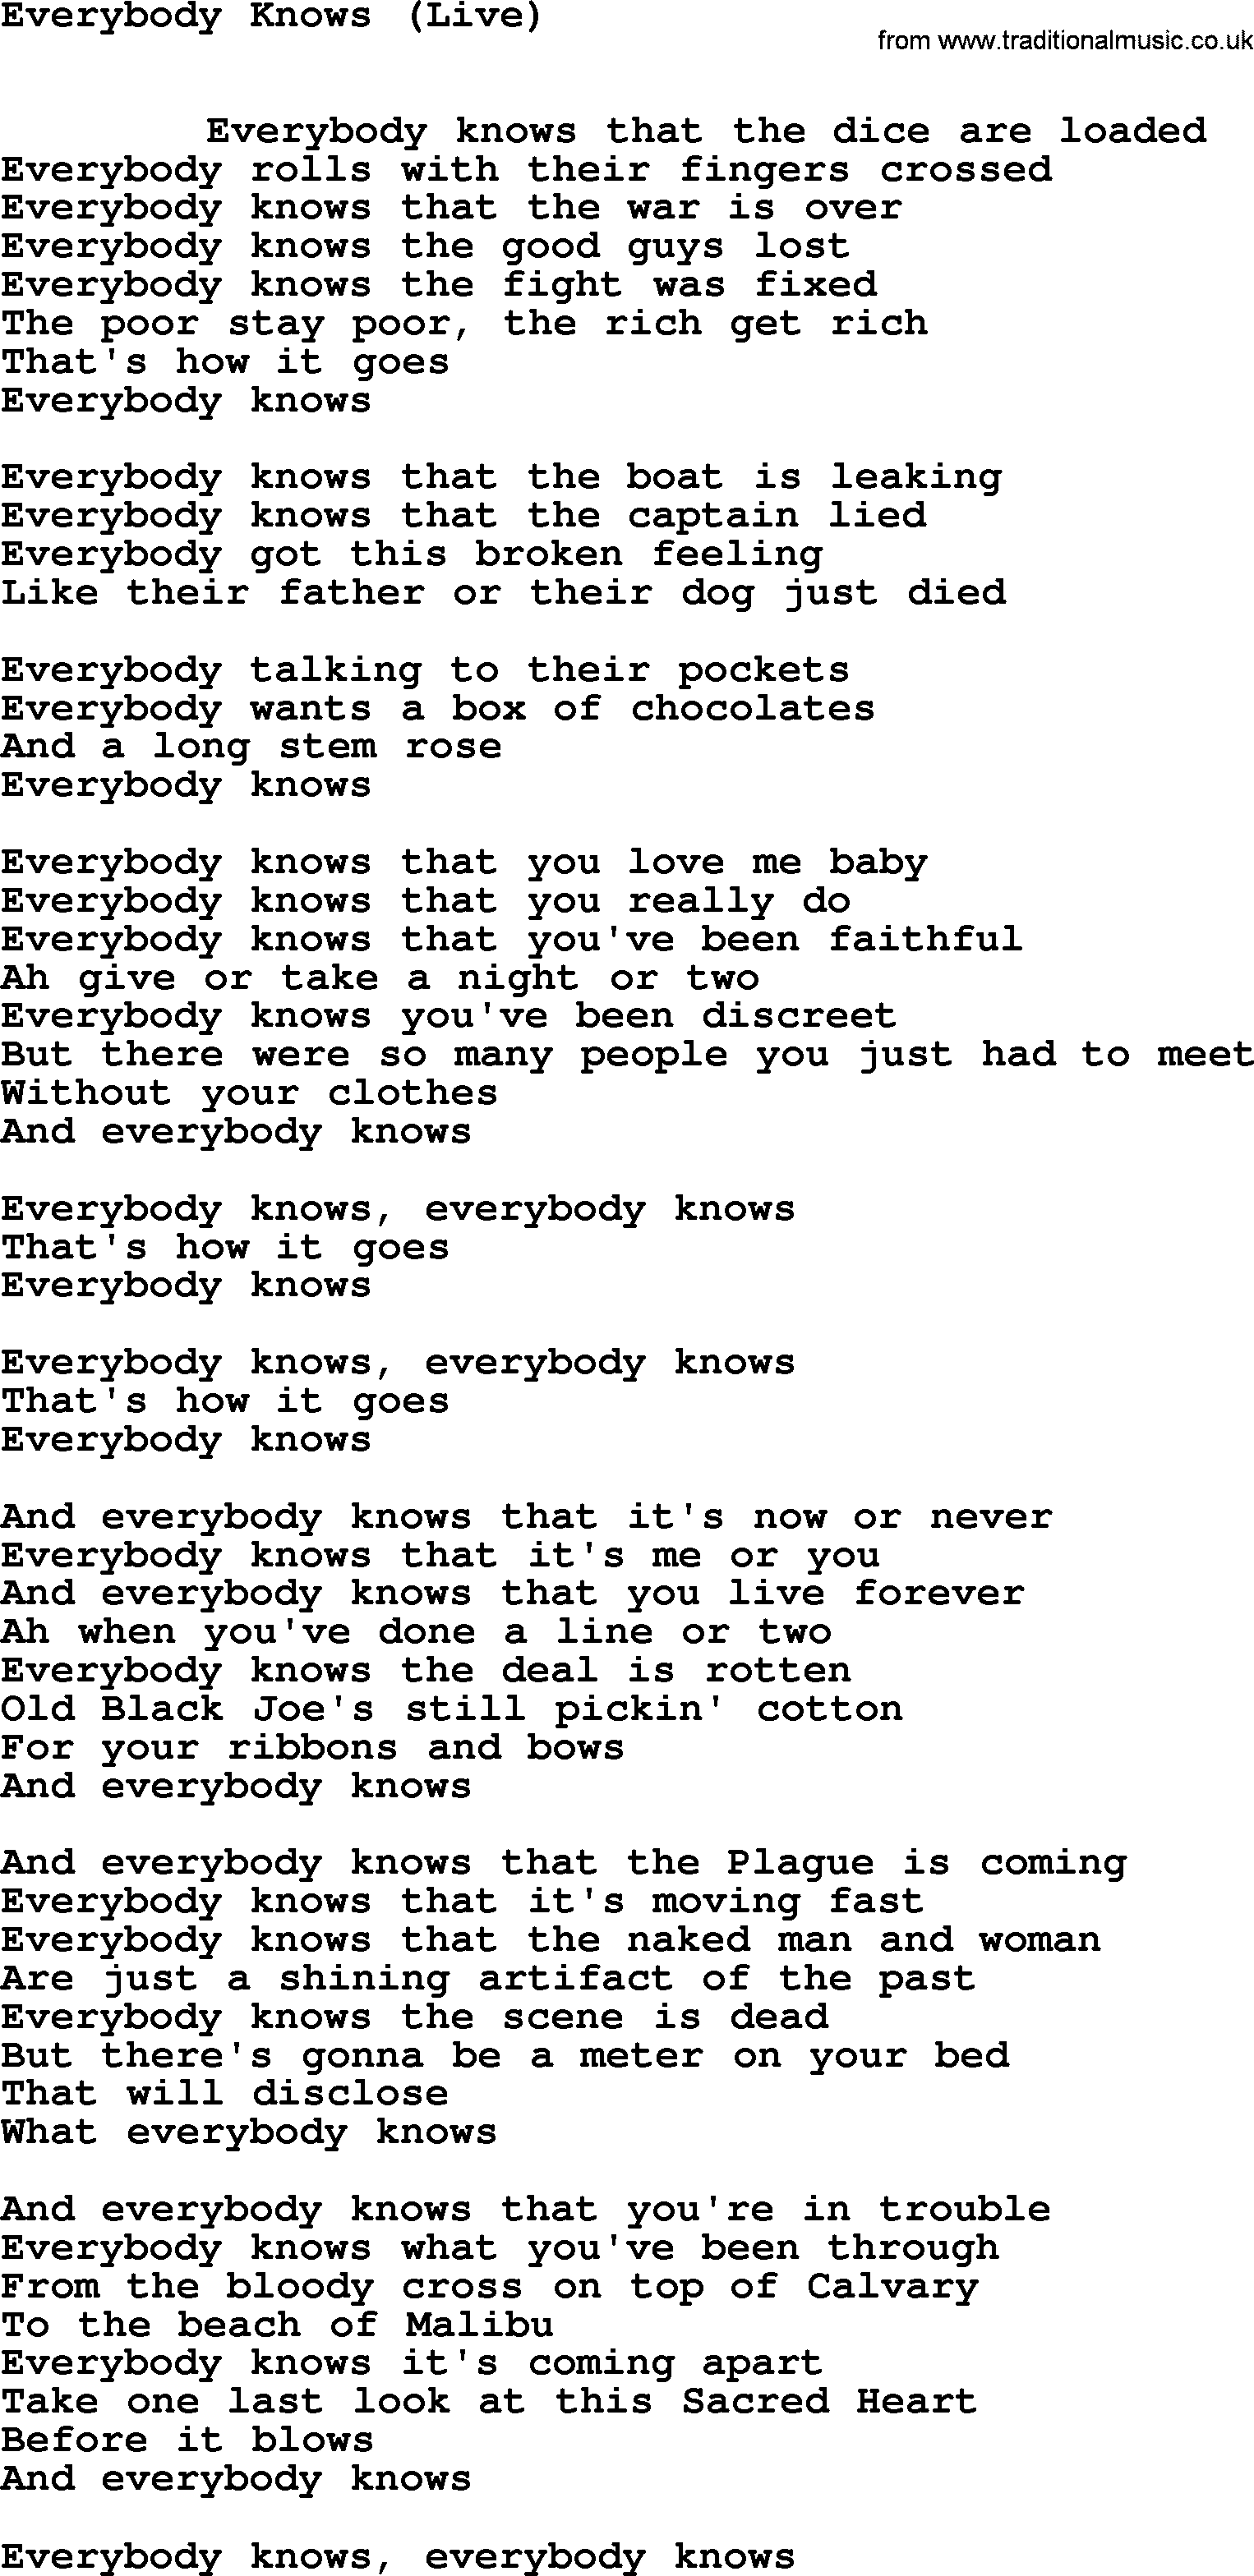 Leonard Cohen song Everybody Knows(Live)-leonard-cohen.txt lyrics